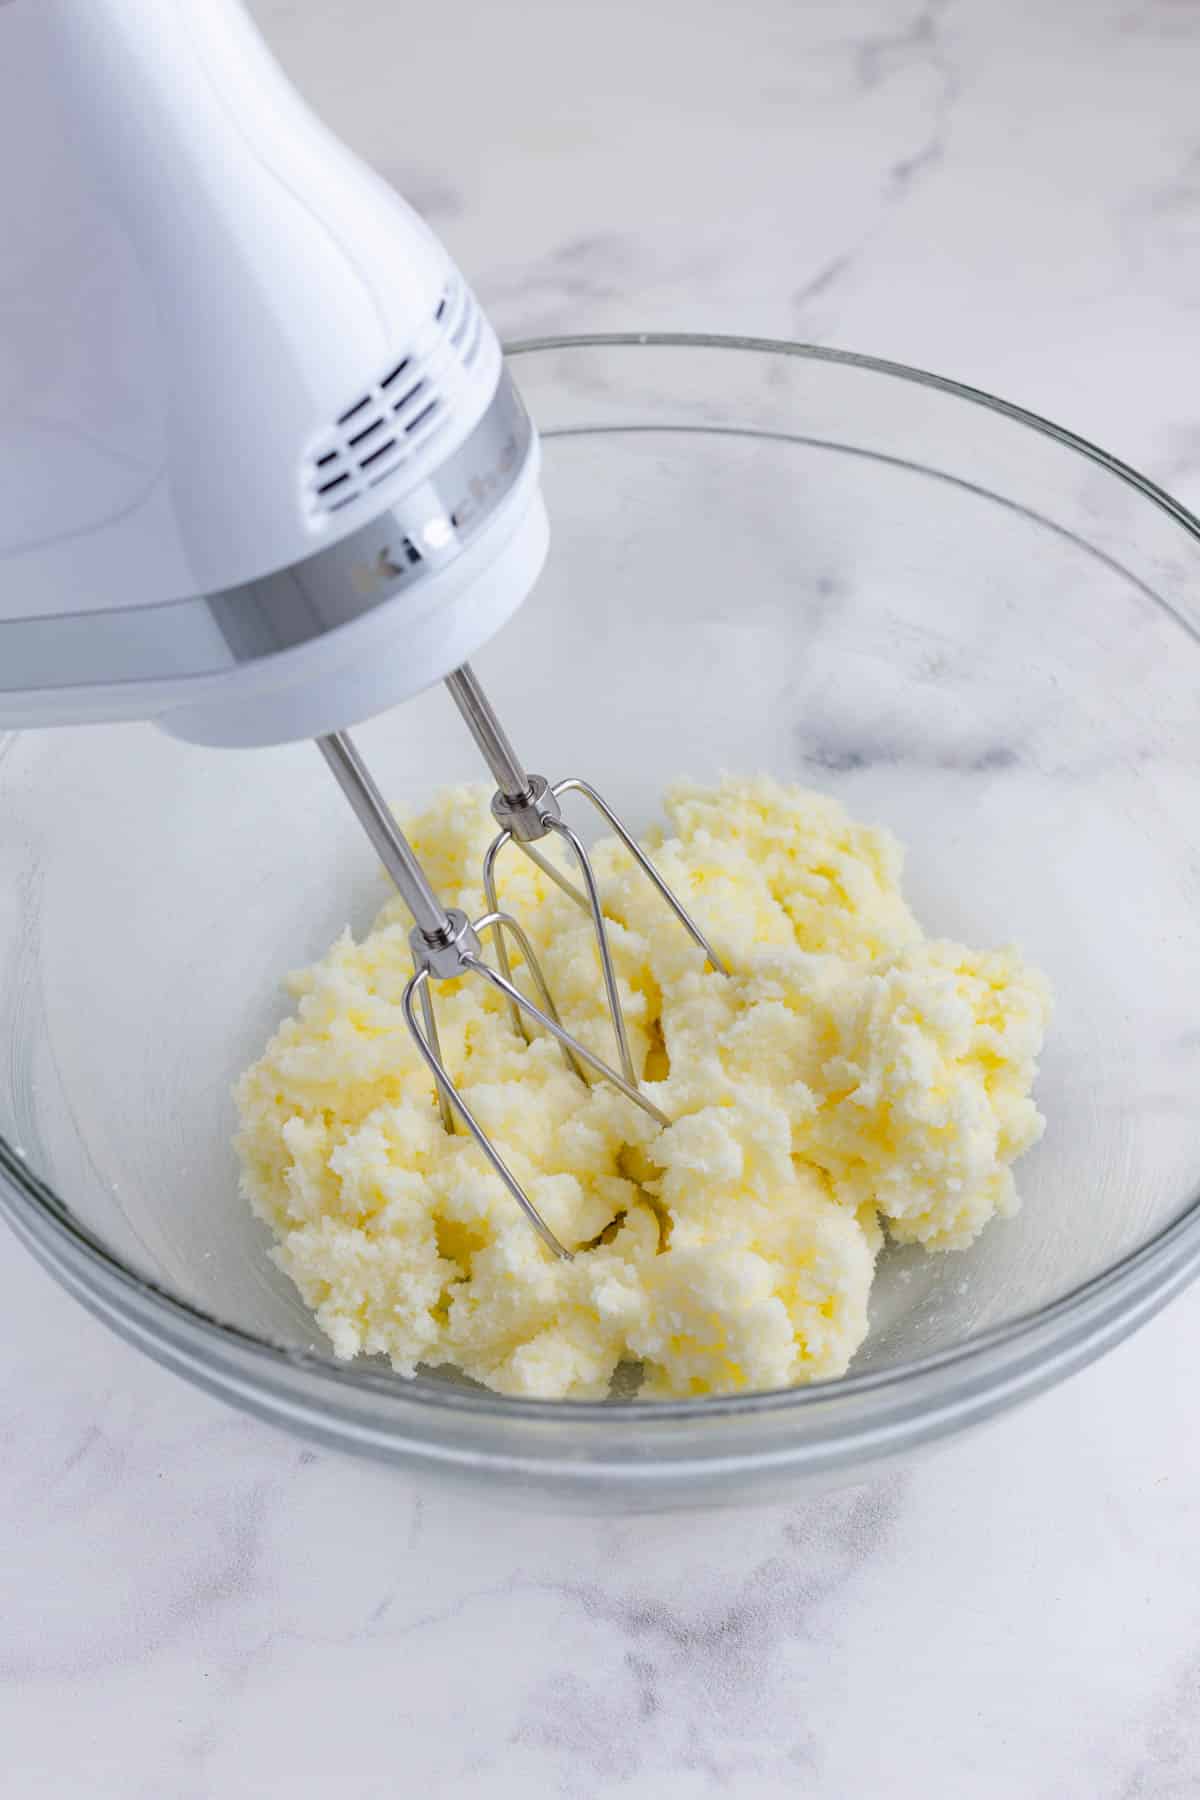 A mixer beats the butter and sugar.